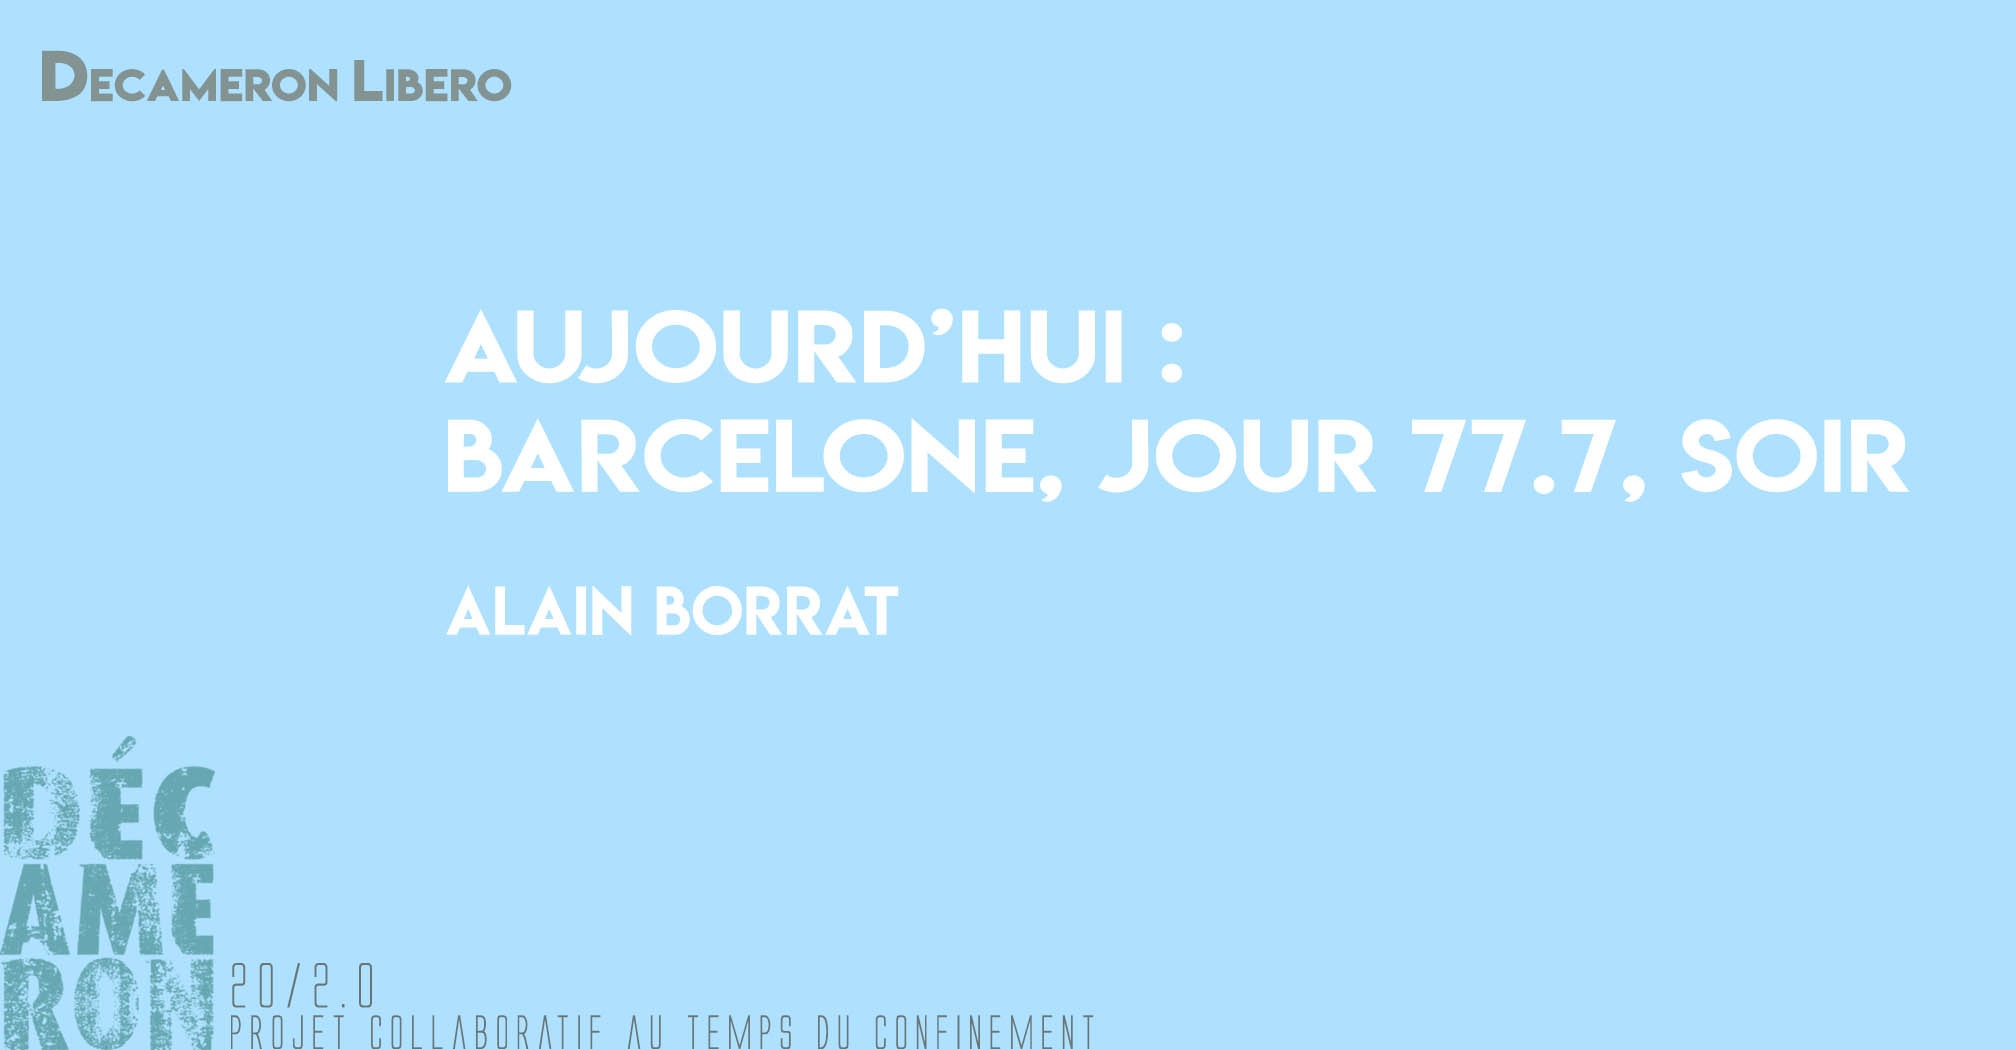 Aujourd’hui : Barcelone, Jour 77.7, soir - Alain Borrat